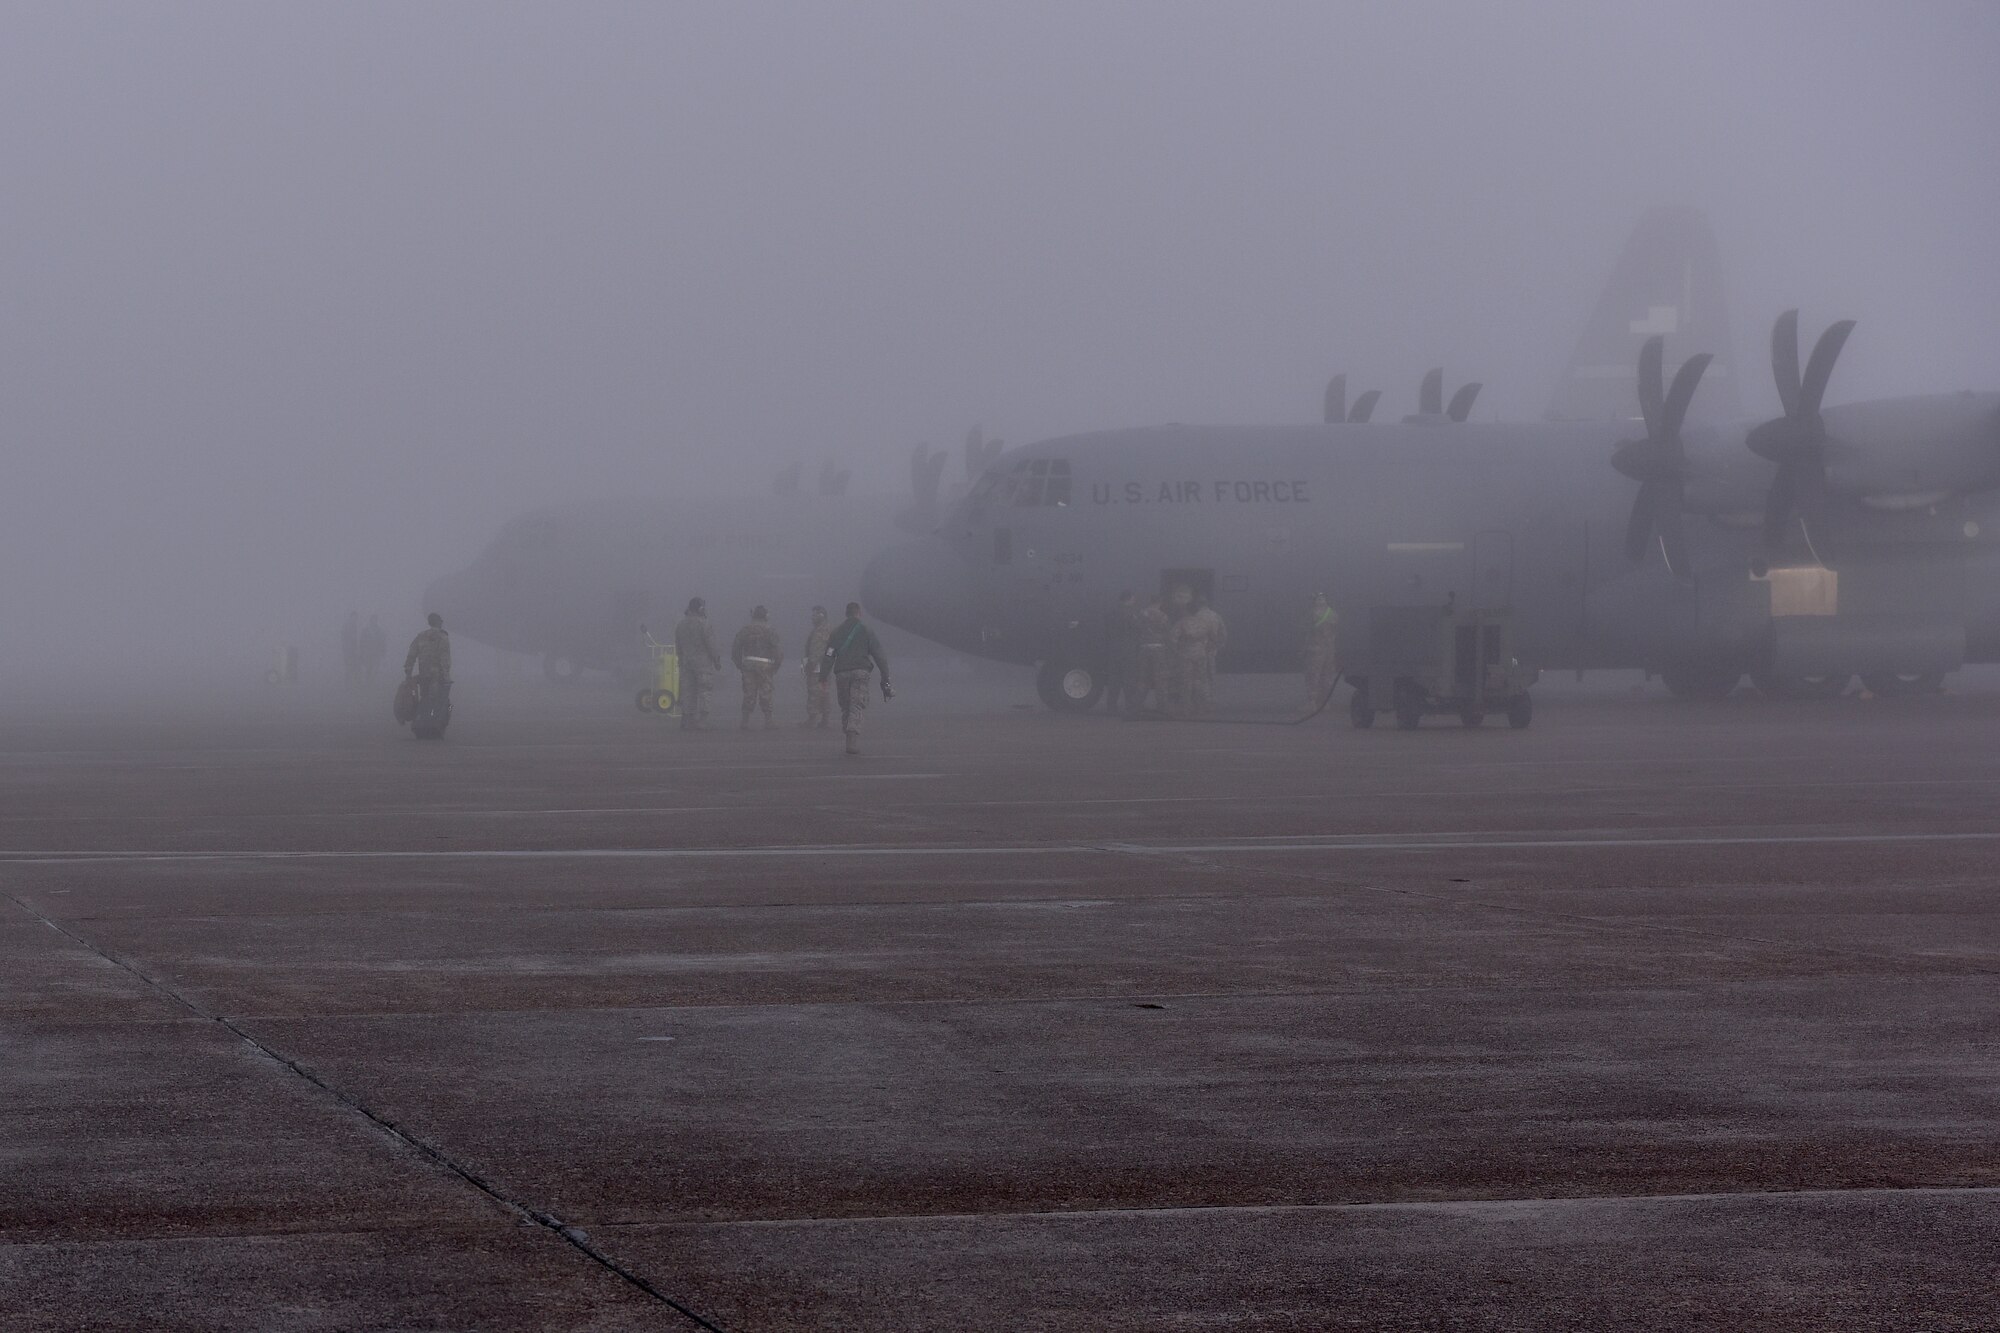 People walk in foggy area beside C-130Js on right of screen.